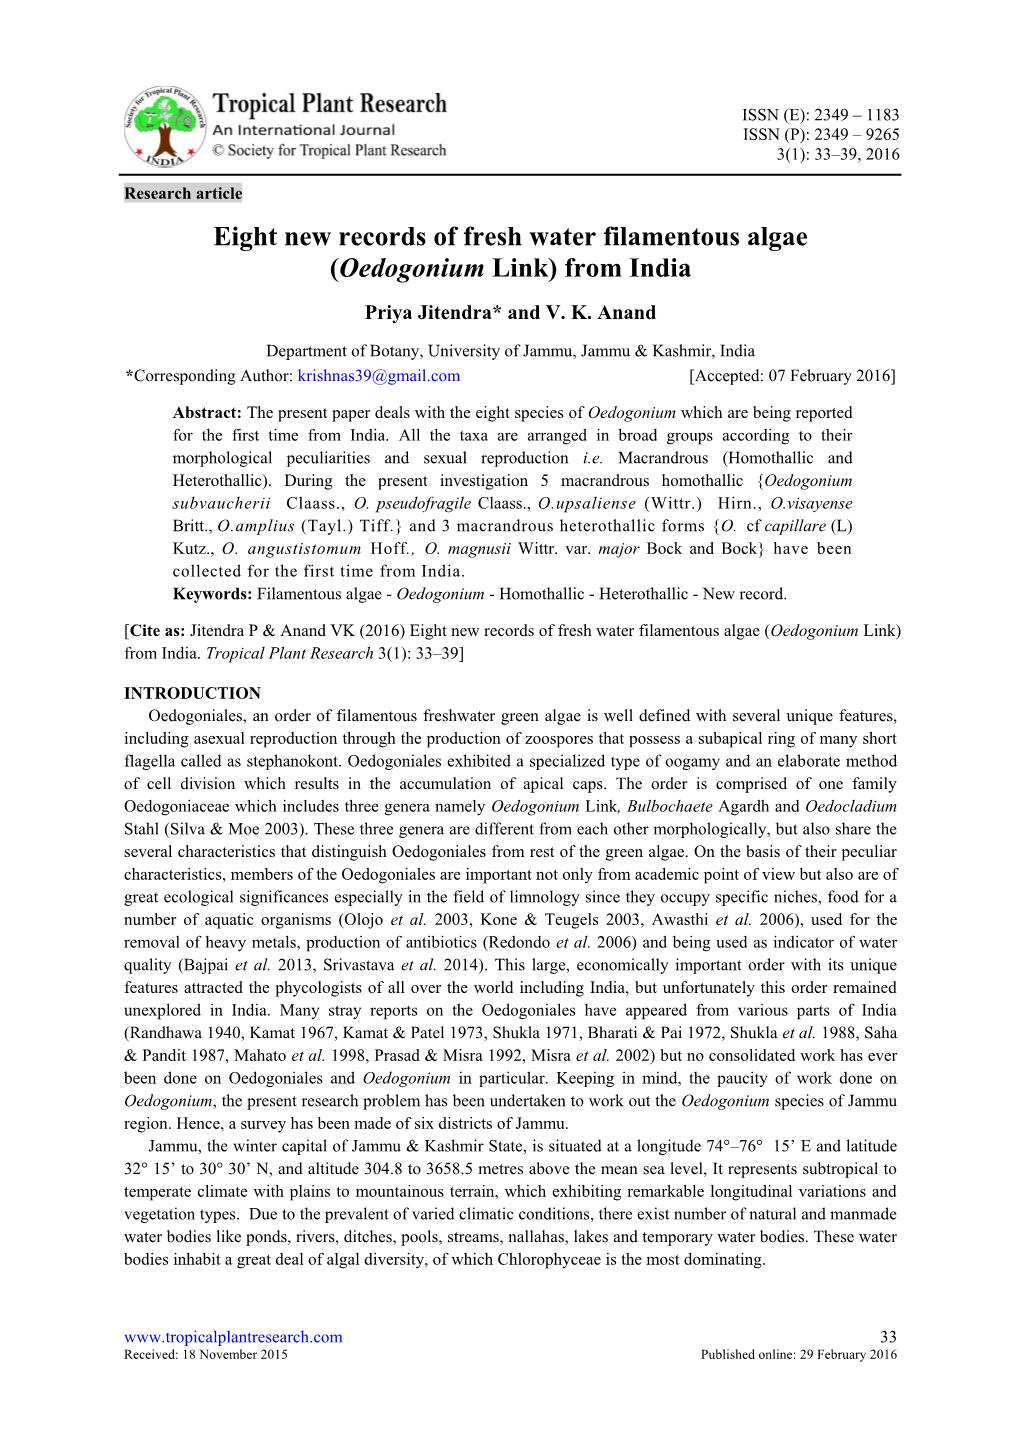 Eight New Records of Fresh Water Filamentous Algae (Oedogonium Link) from India Priya Jitendra* and V